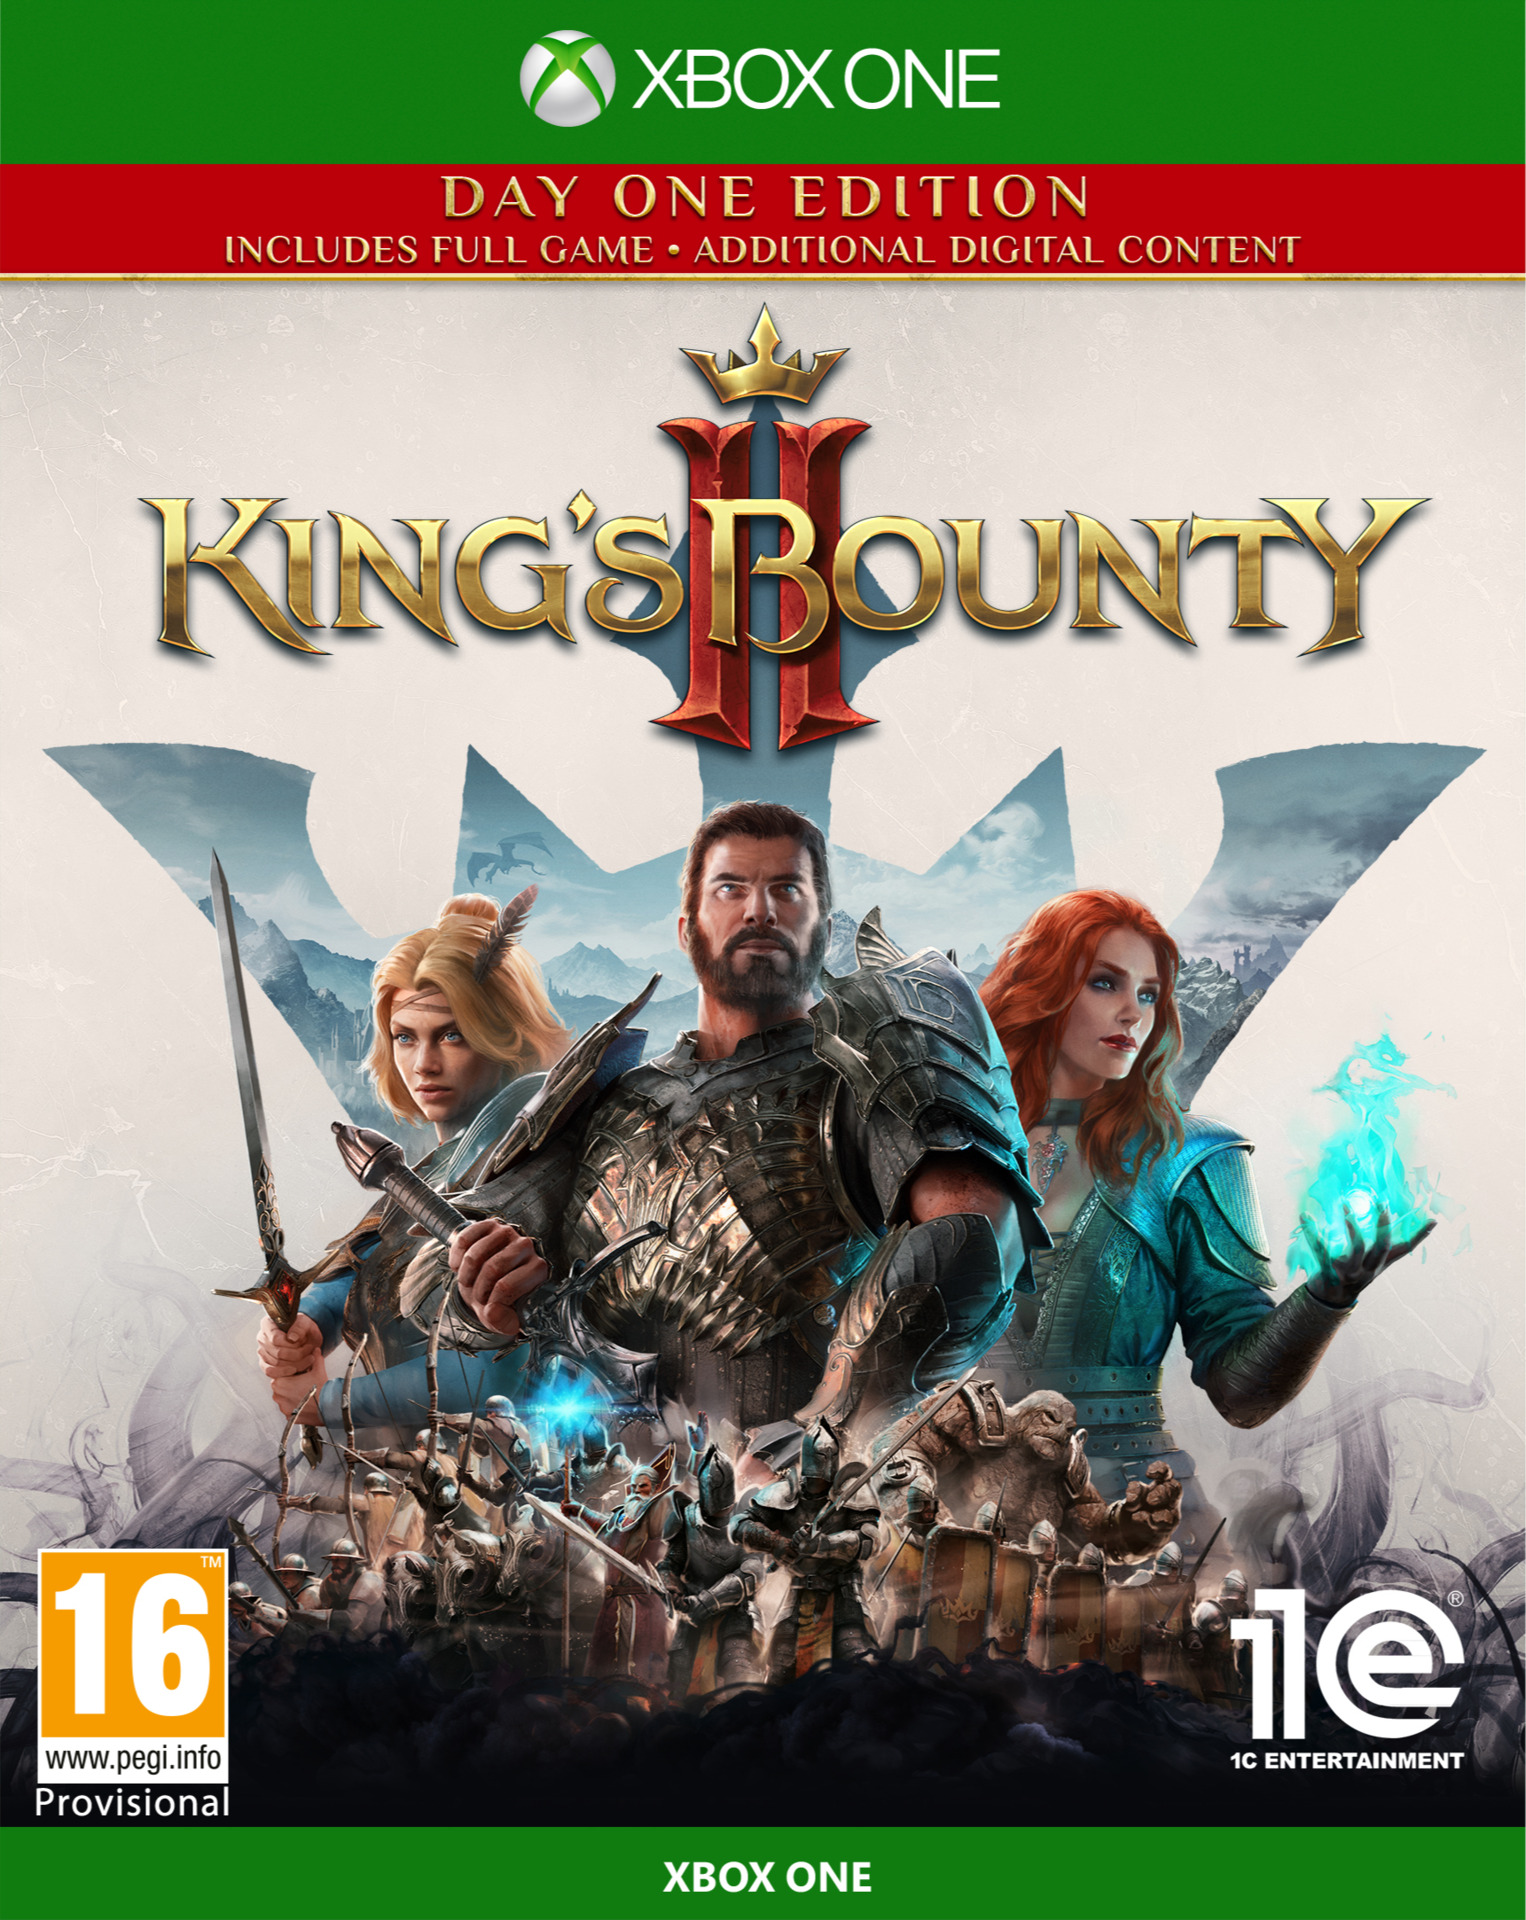 King's Bounty II - Издание первого дня [Xbox One, русская версия]